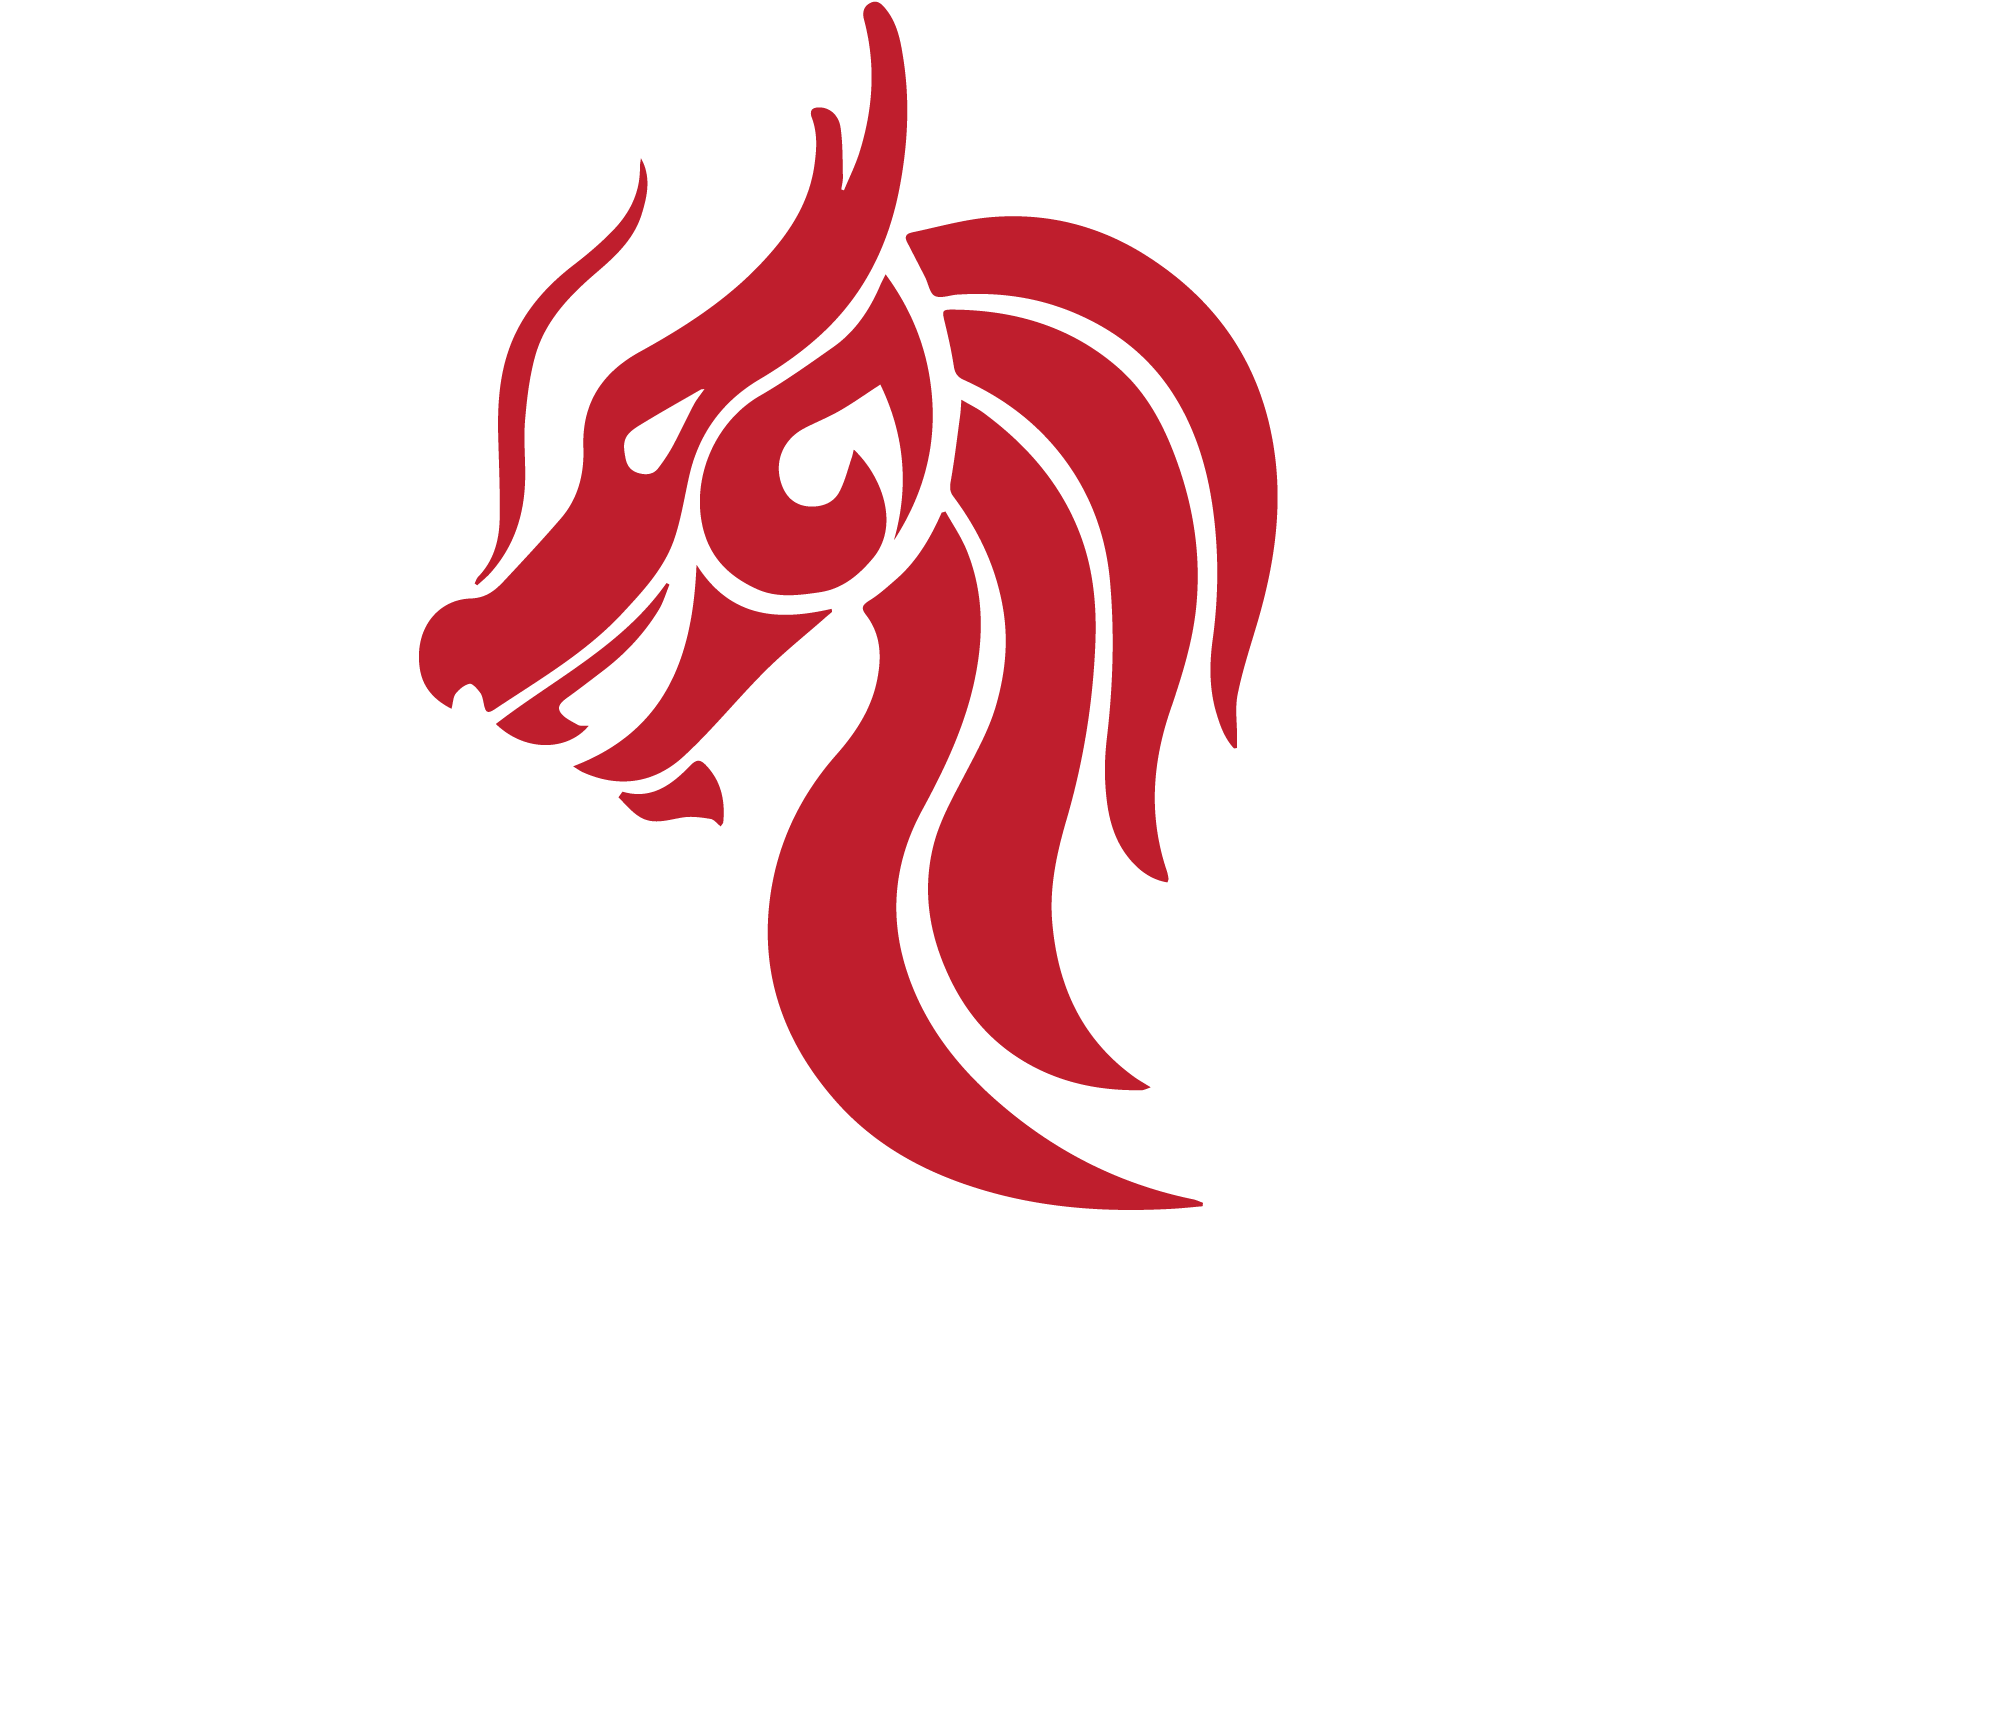 Trend Dragon Global - Graphic Design (3313x2342)